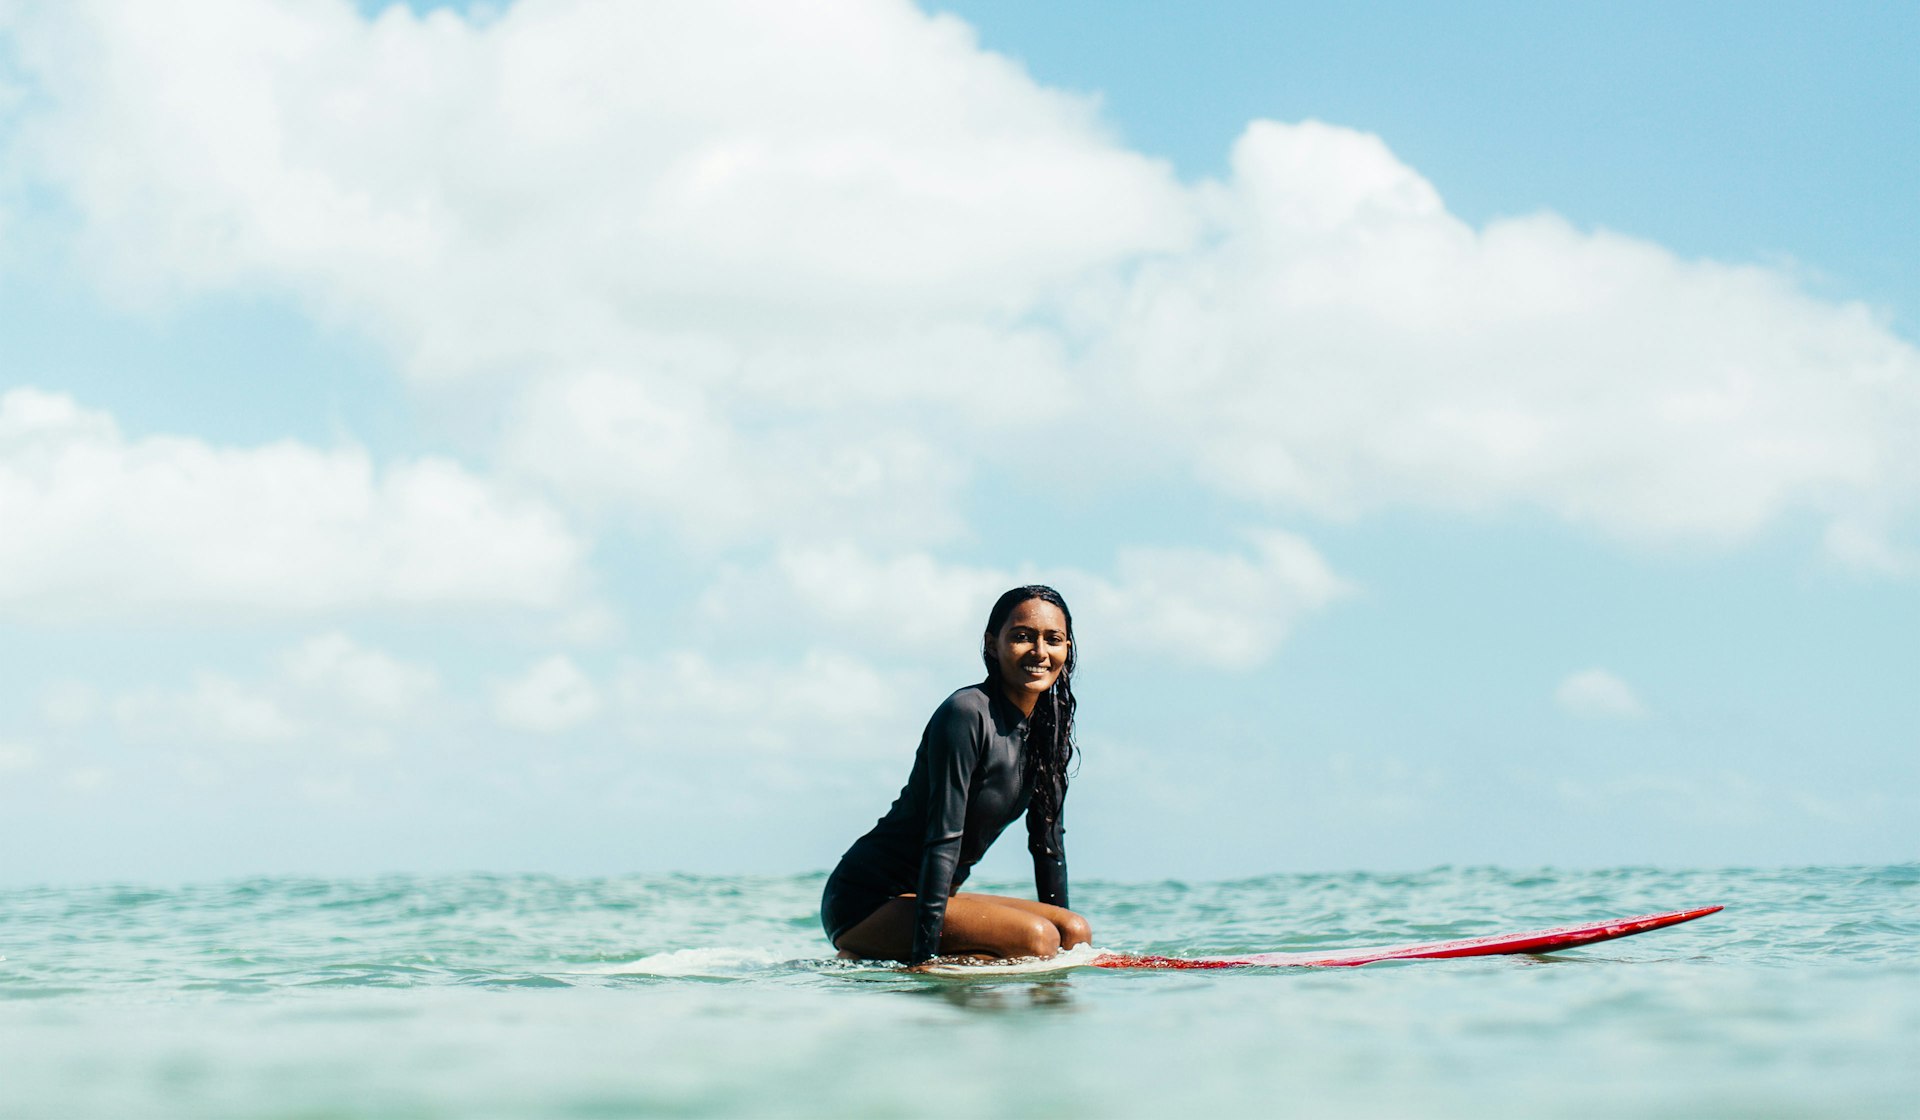 Meet Ishita Malaviya, India's first female surfer